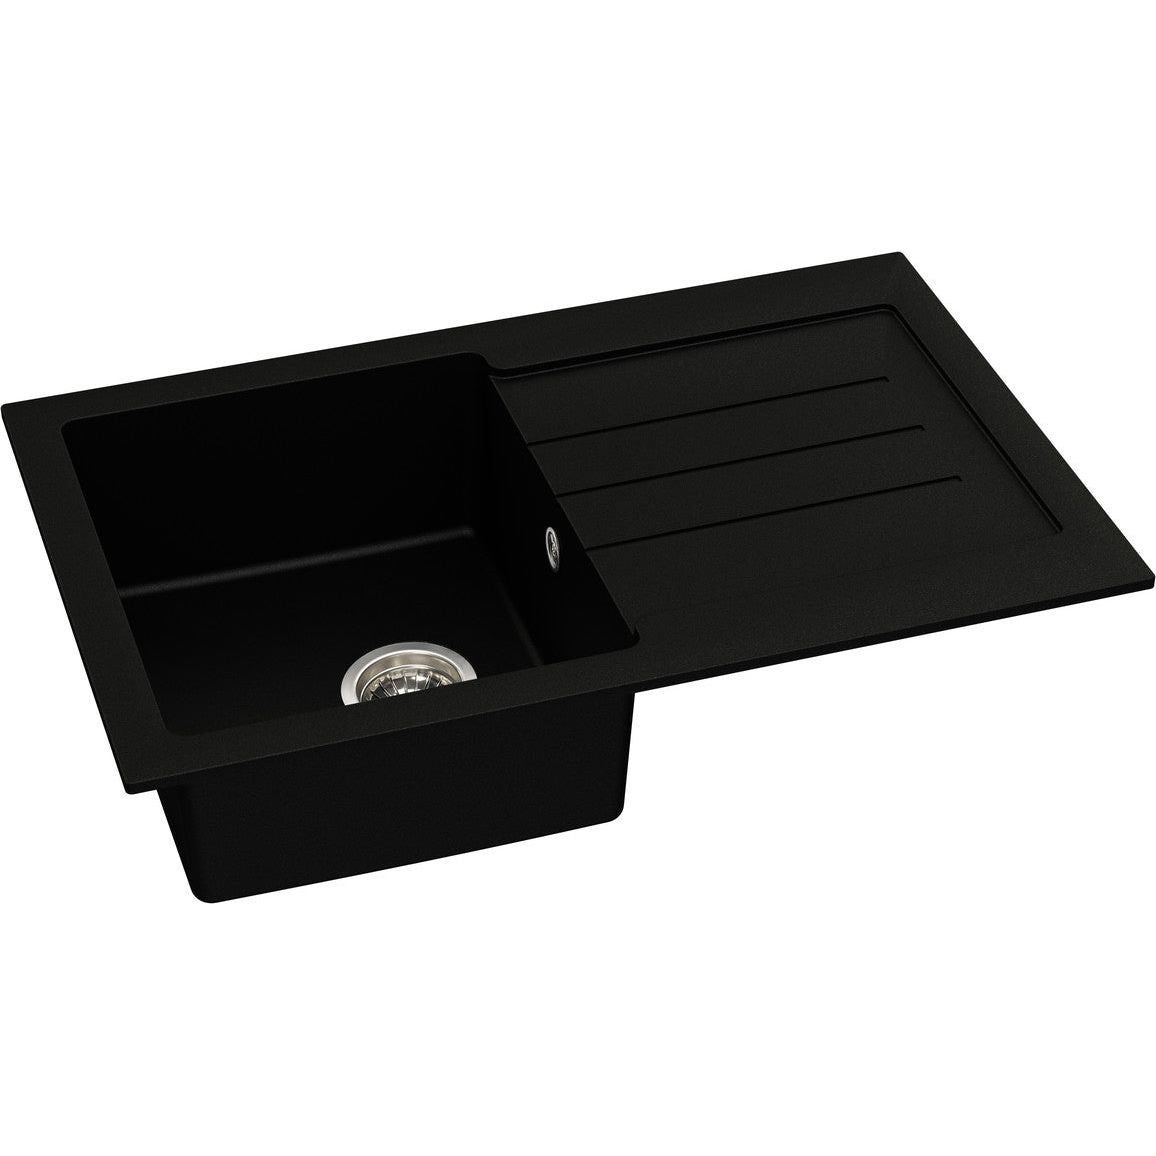 Abode Xcite 1B Inset Black Metallic Sink & Astral Tap Pack